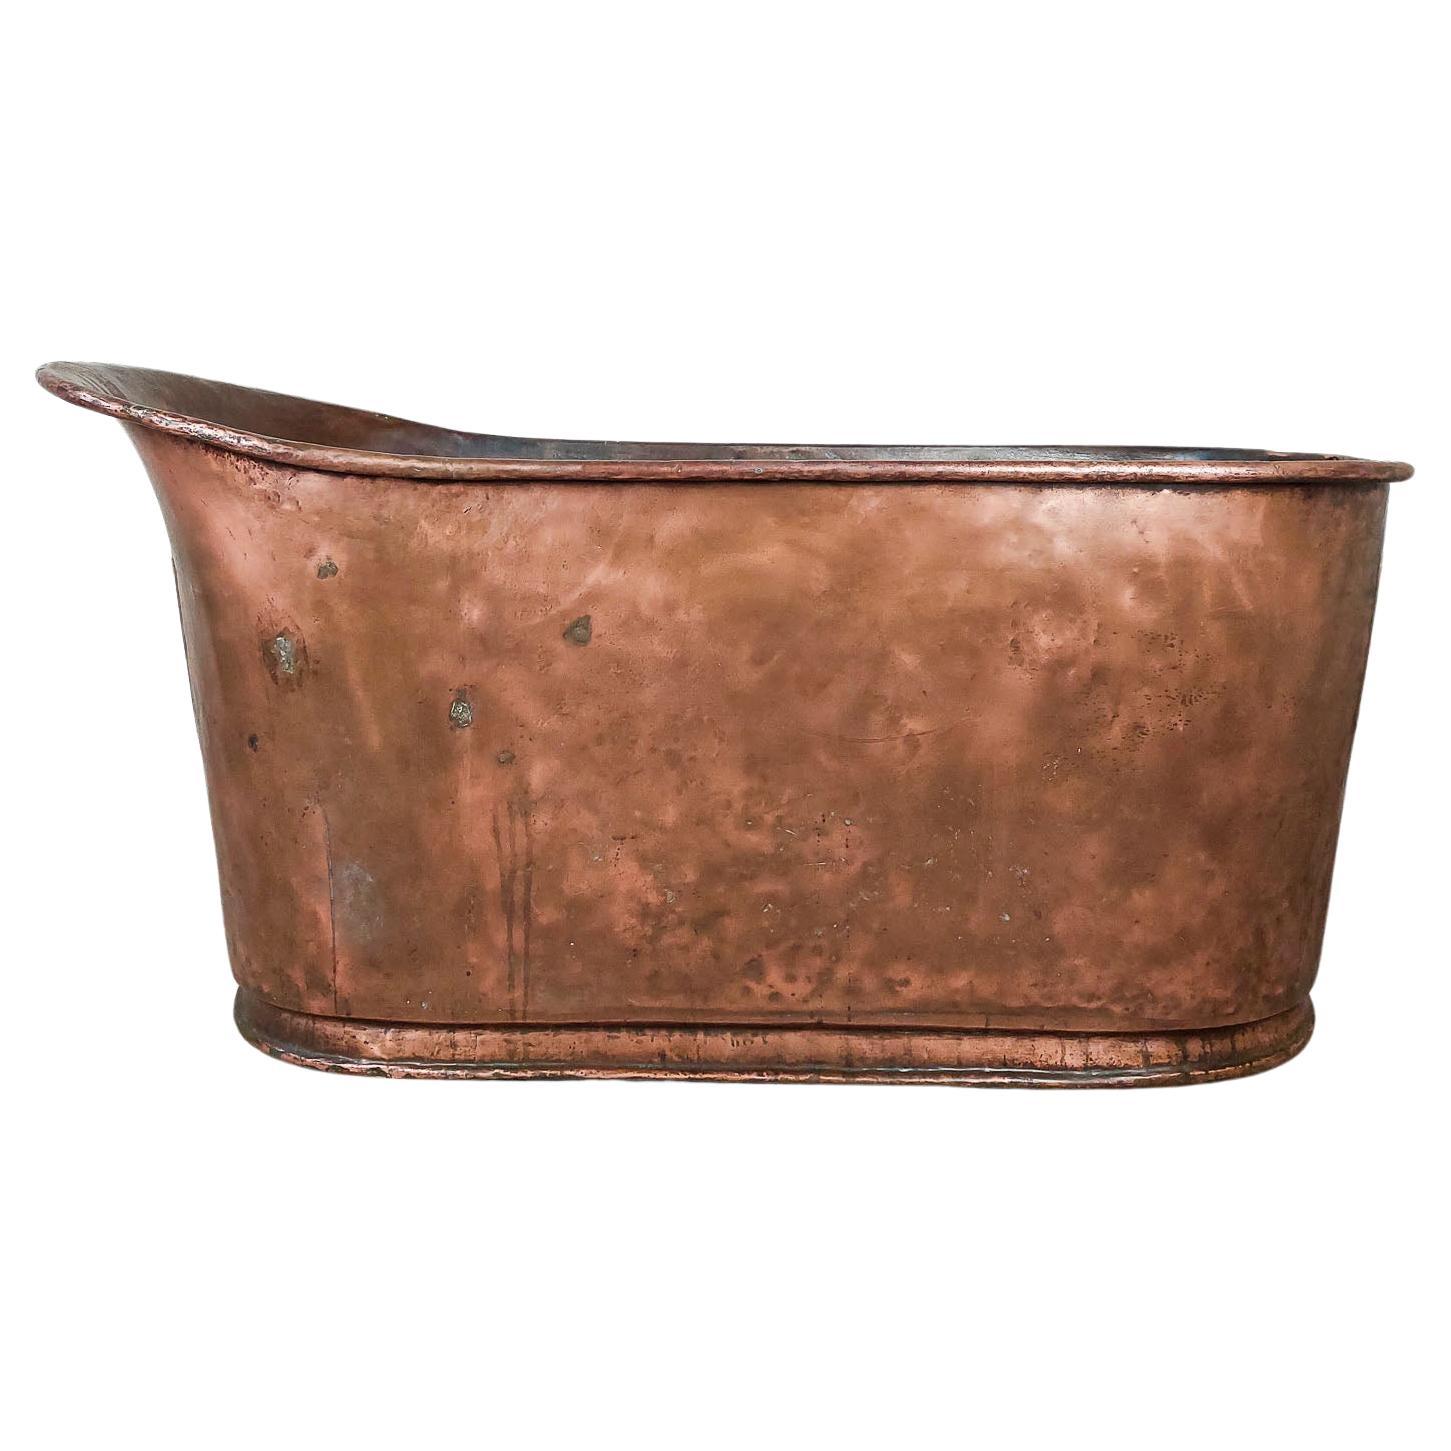 Early 19th Century Copper Bathtub For Sale